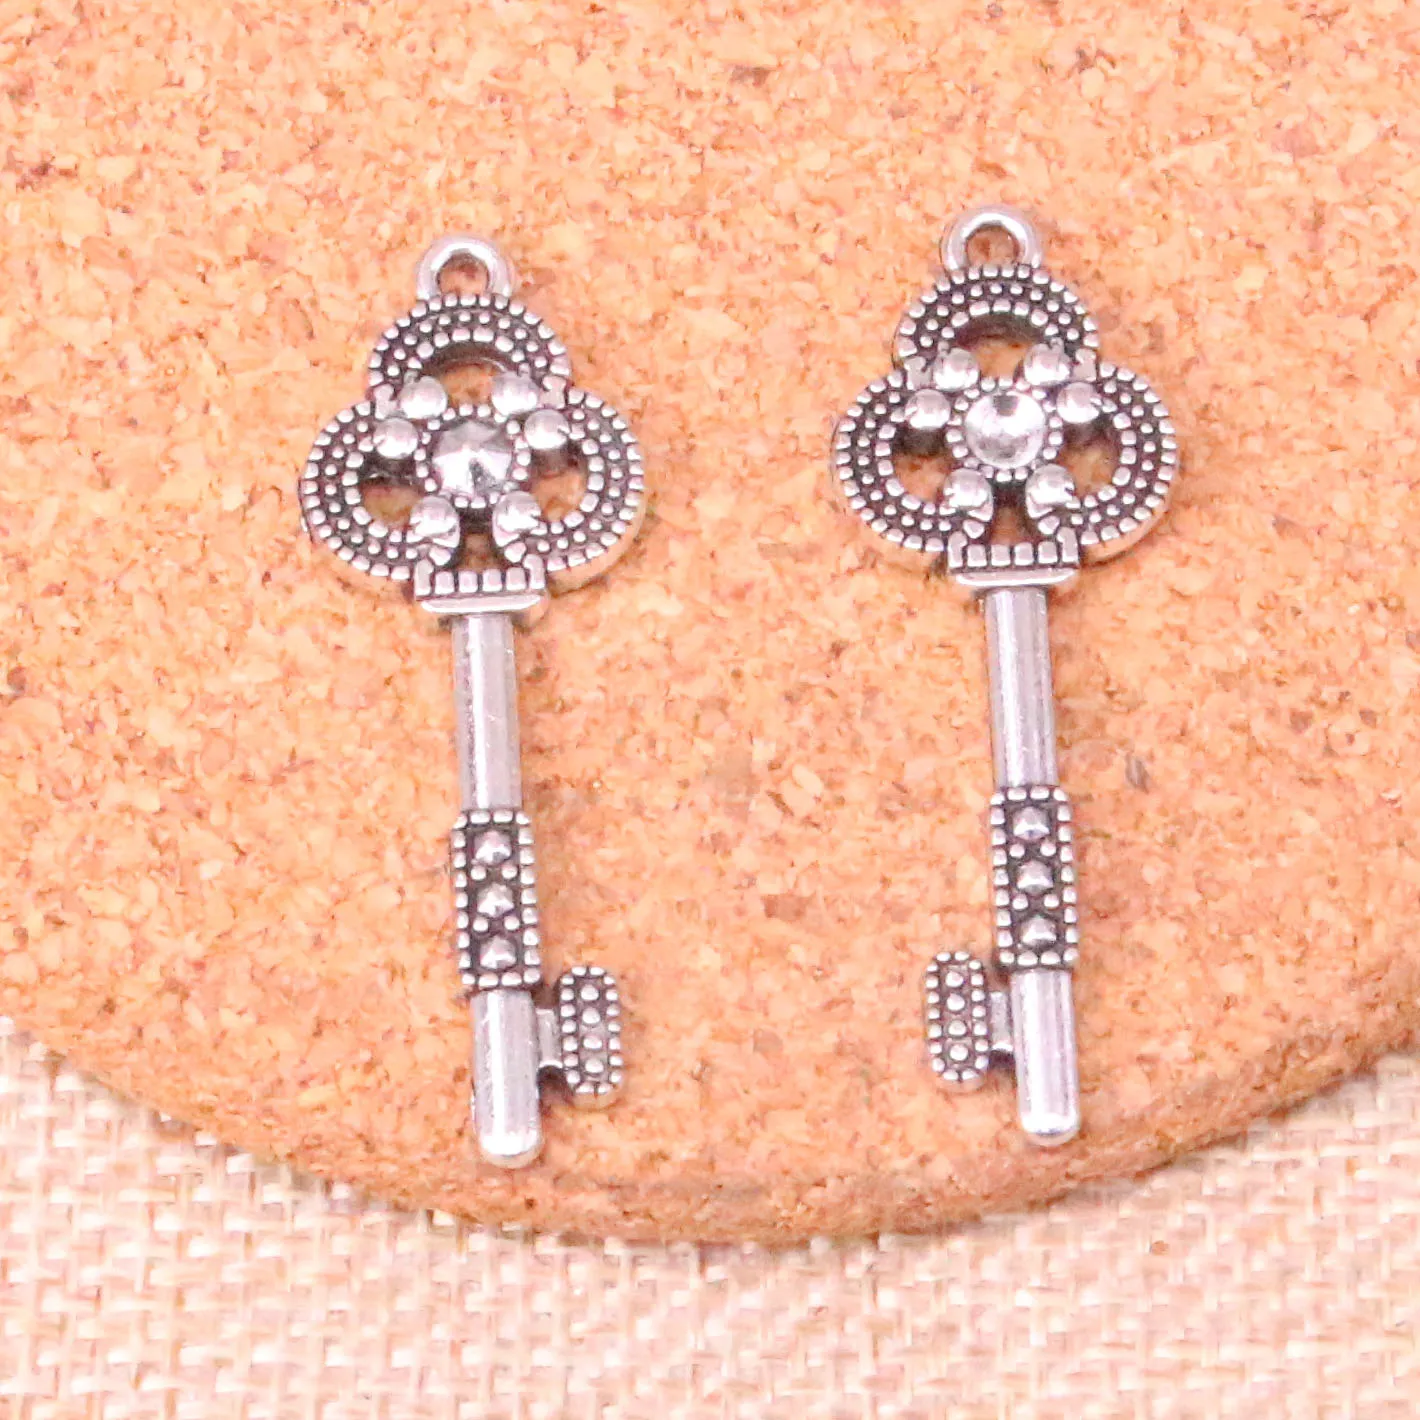 41pcs Charms vintage skeleton key 46*18mm Antique Making pendant fit,Vintage Tibetan Silver,DIY Handmade Jewelry